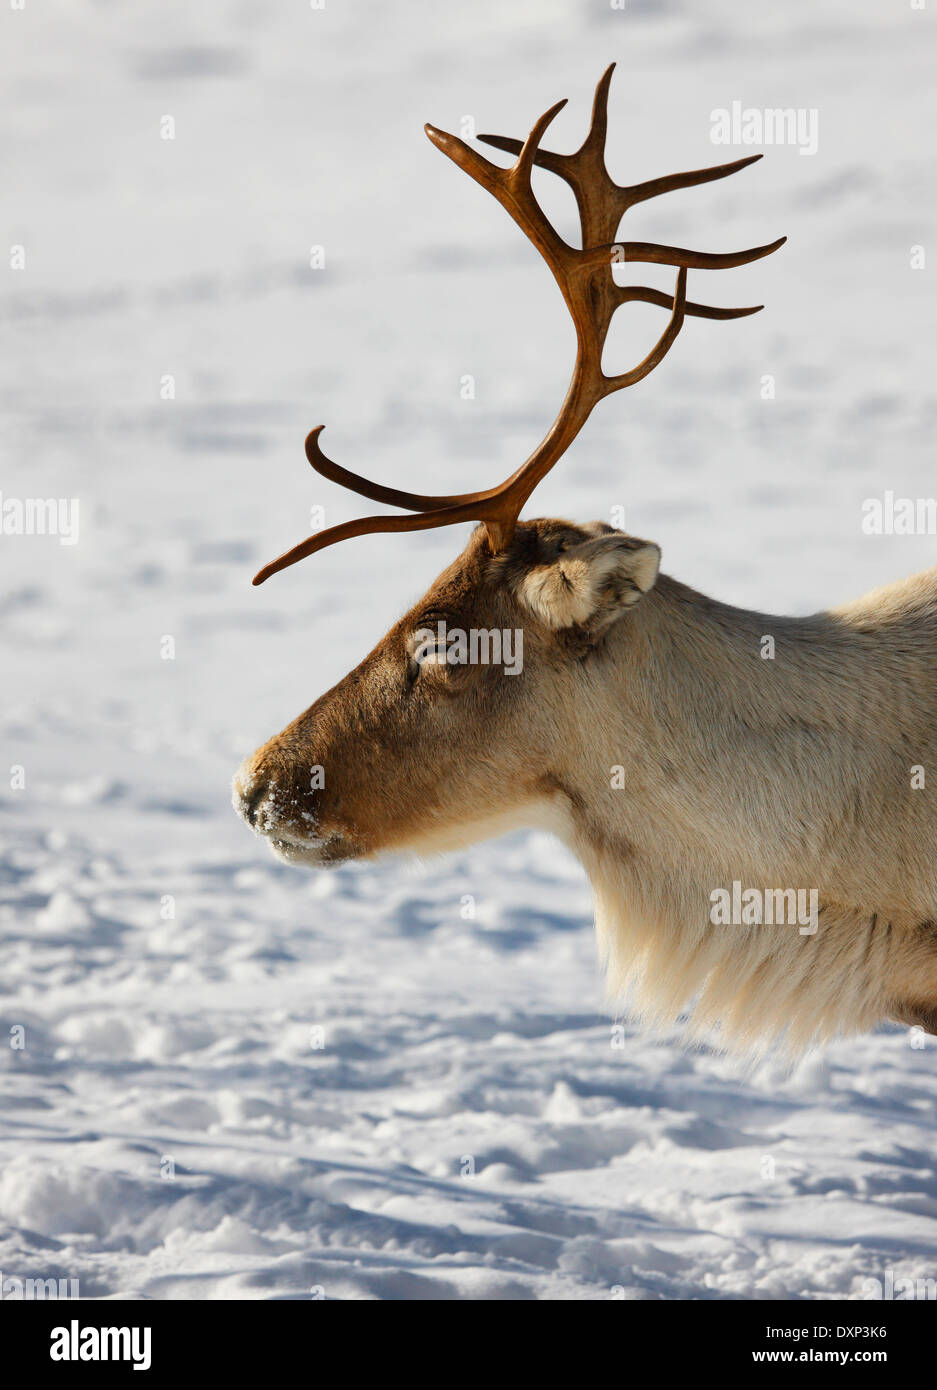 Male reindeer, Lapland Finland Stock Photo